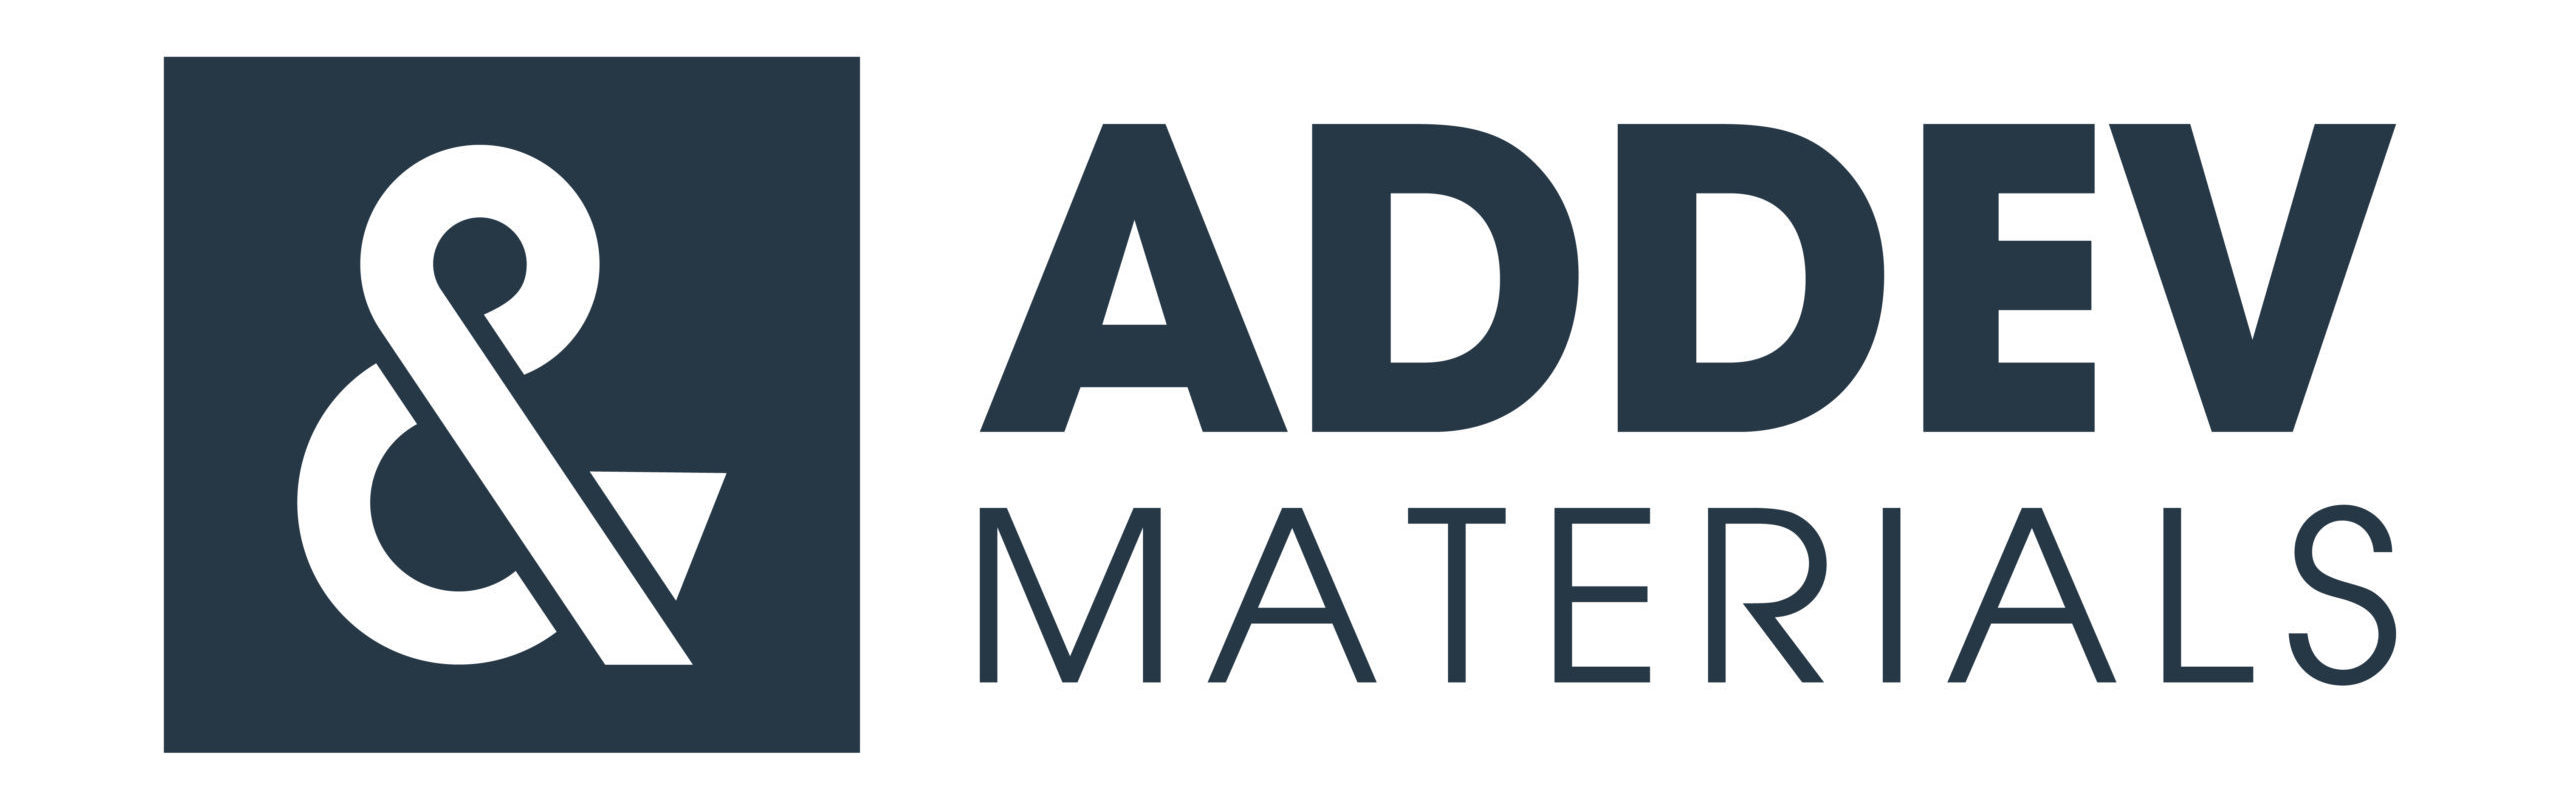 ADDEV Materials – Corporate